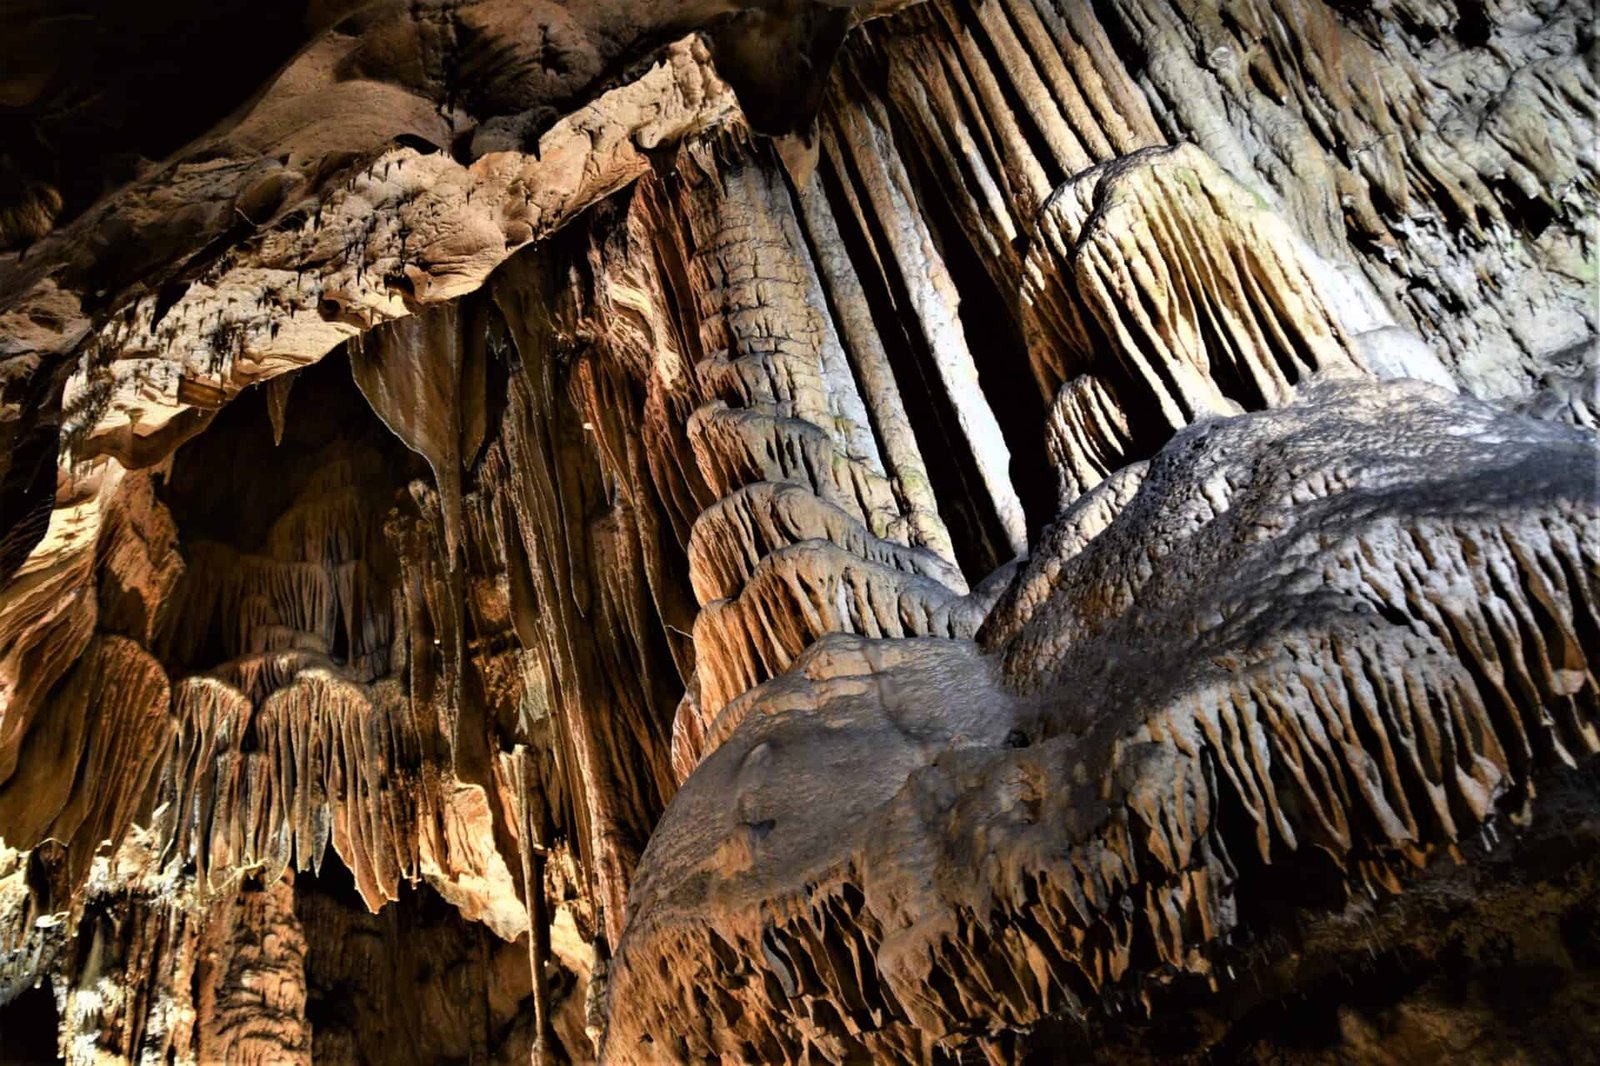 dripstone tower, stalagmites, and stalactites in Jasovsá Cave, Slovakia